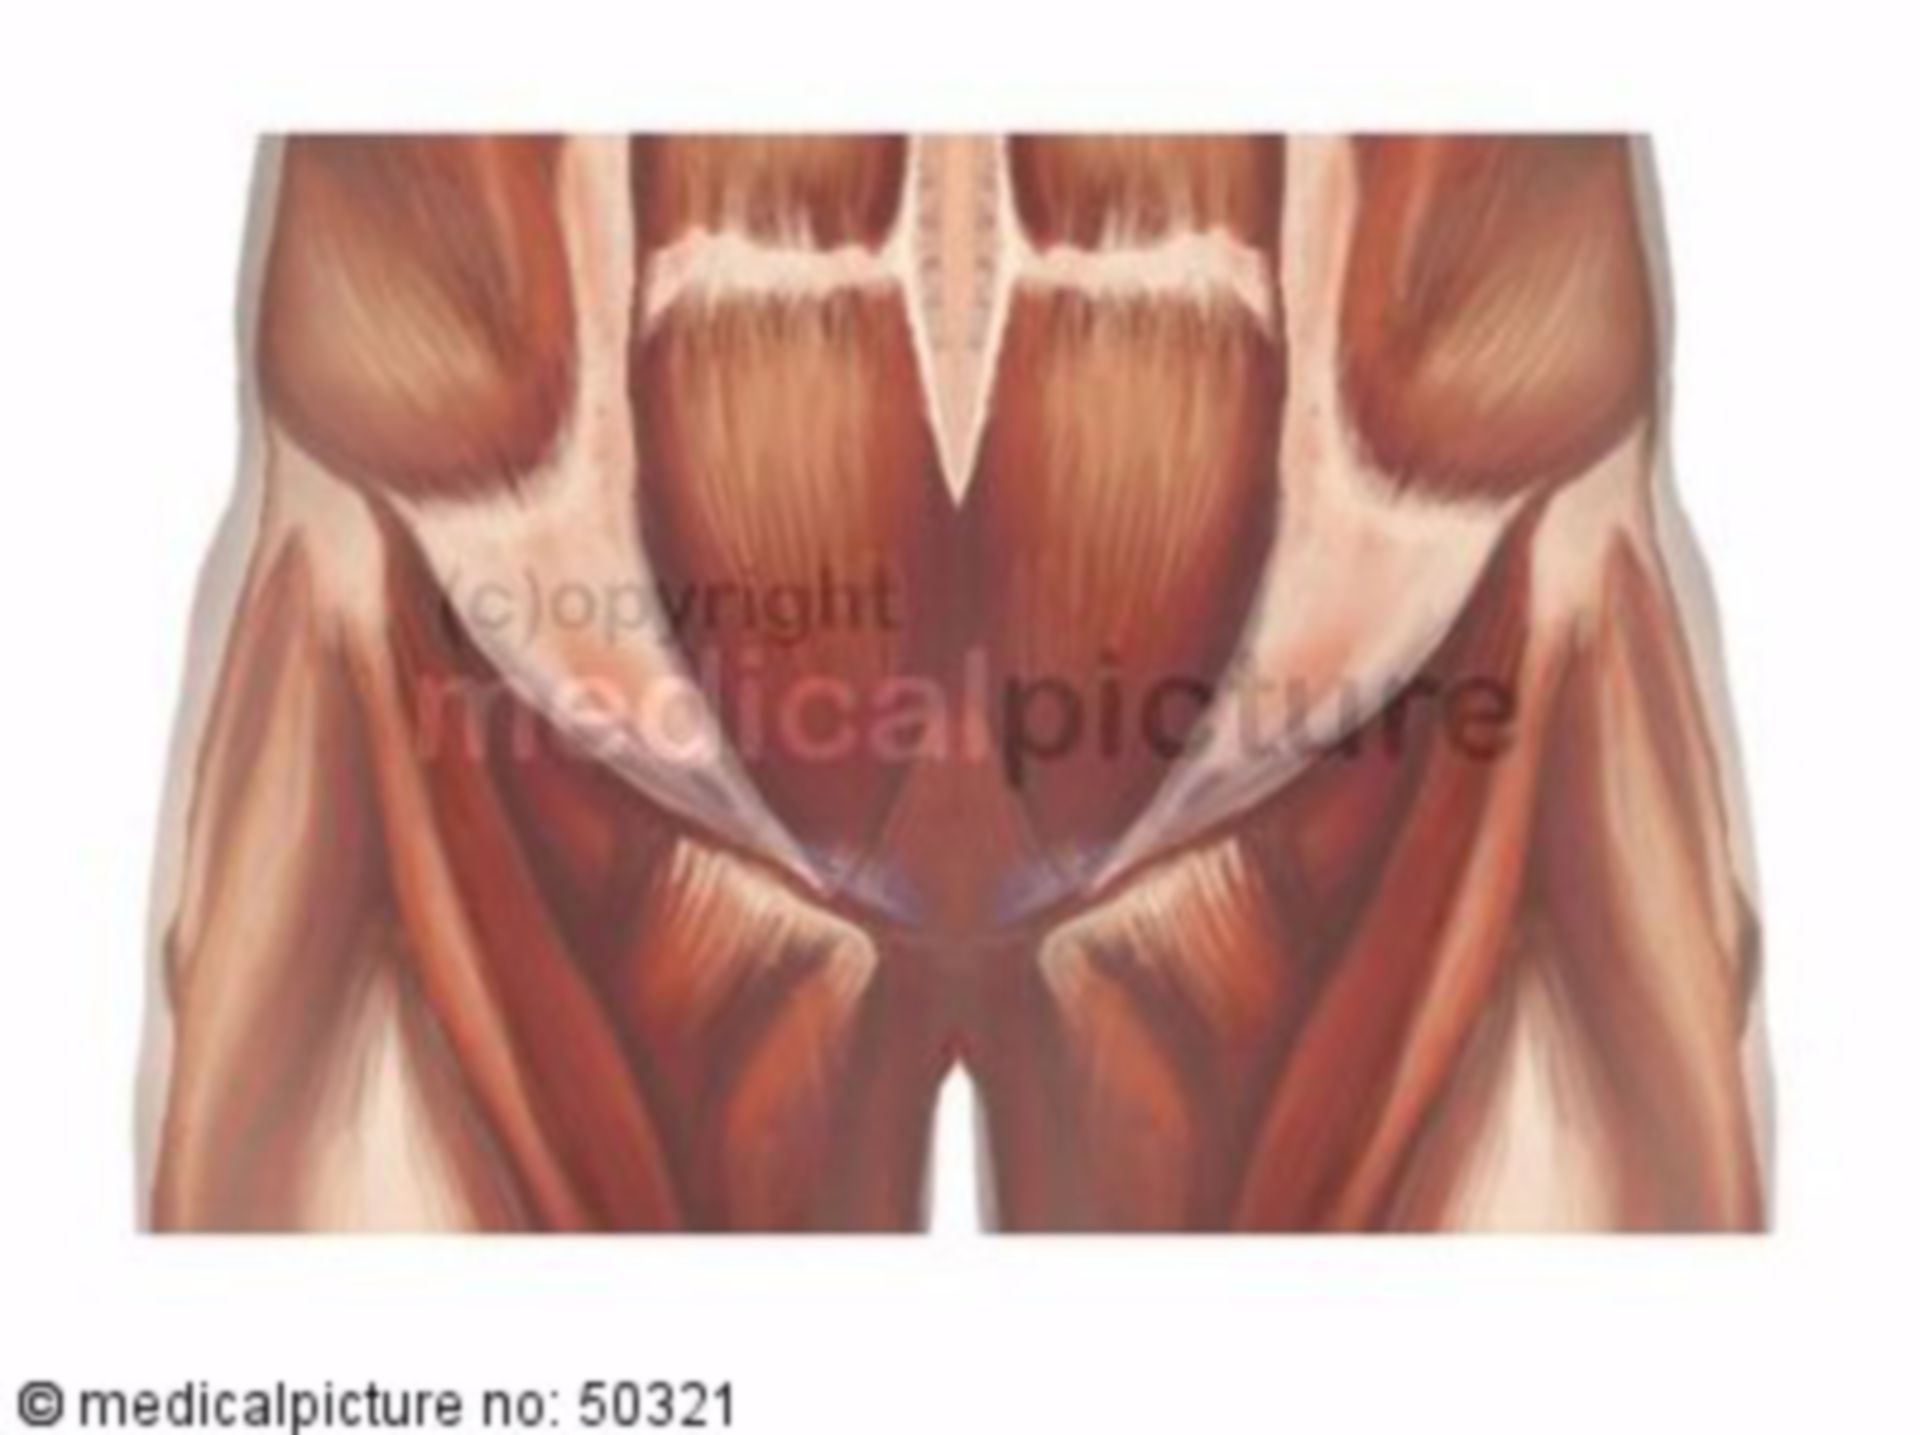 Anatomy of the pelvic area